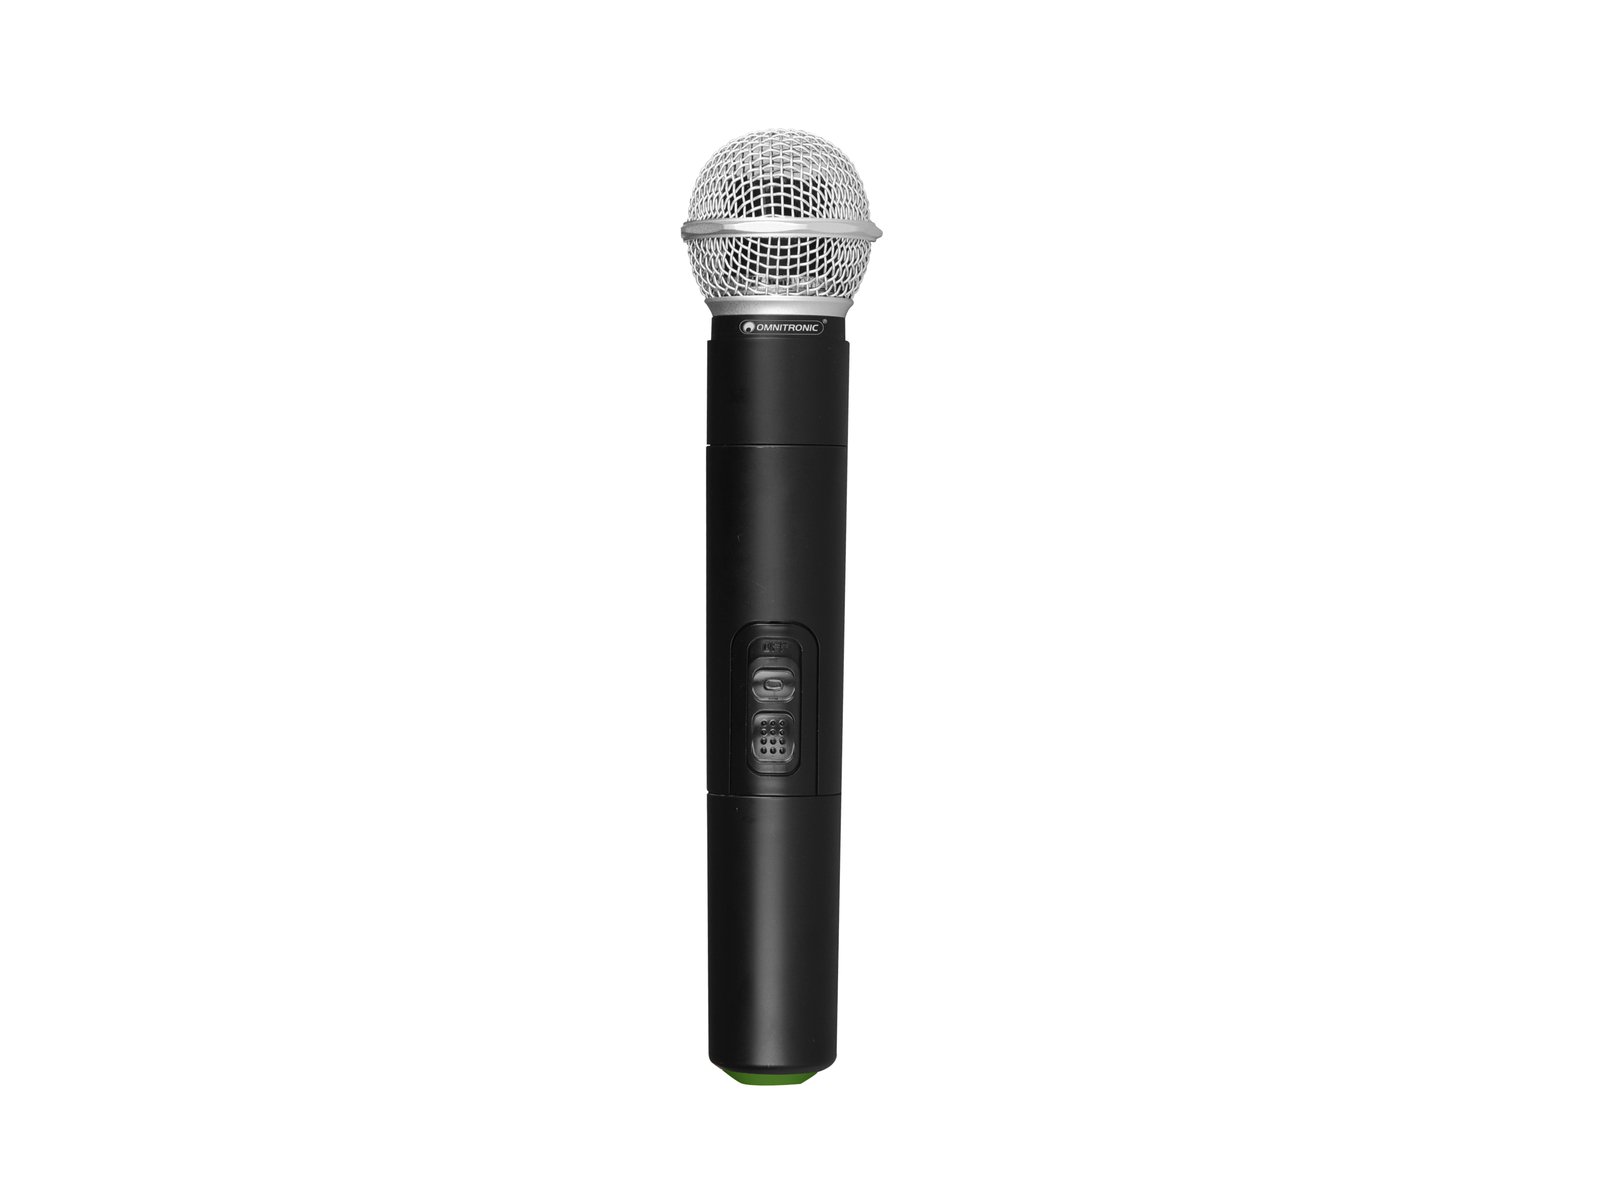 OMNITRONIC UHF-E Series Handheld Microphone 525.3MHz